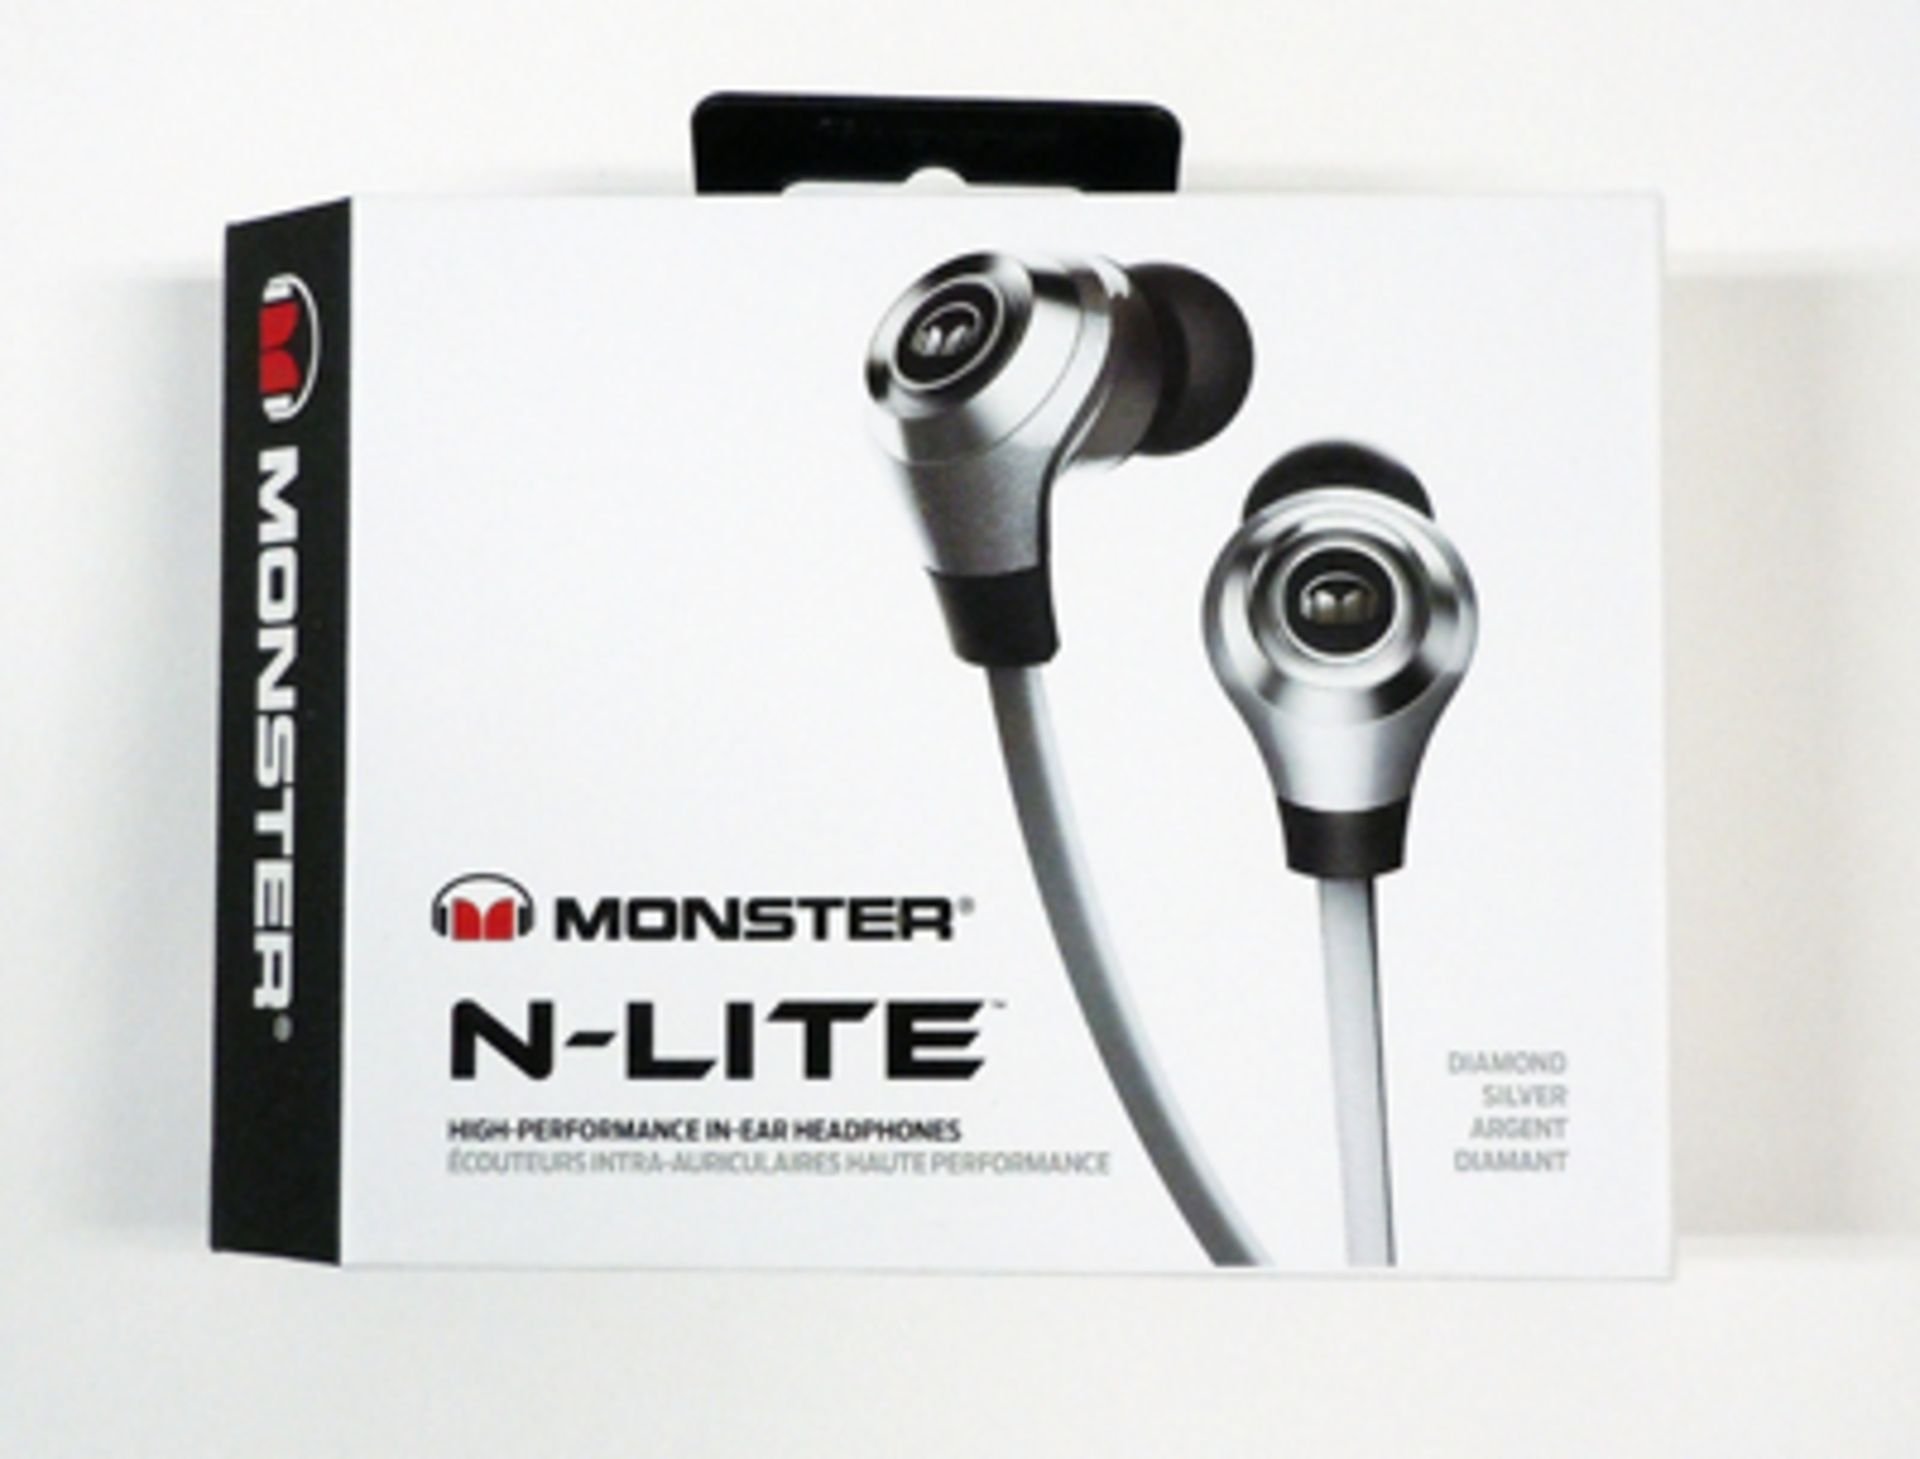 V Brand New Monster N-Lite High Performance In-Ear Headphones In Silver RRP49.99 X 3 Bid price to be